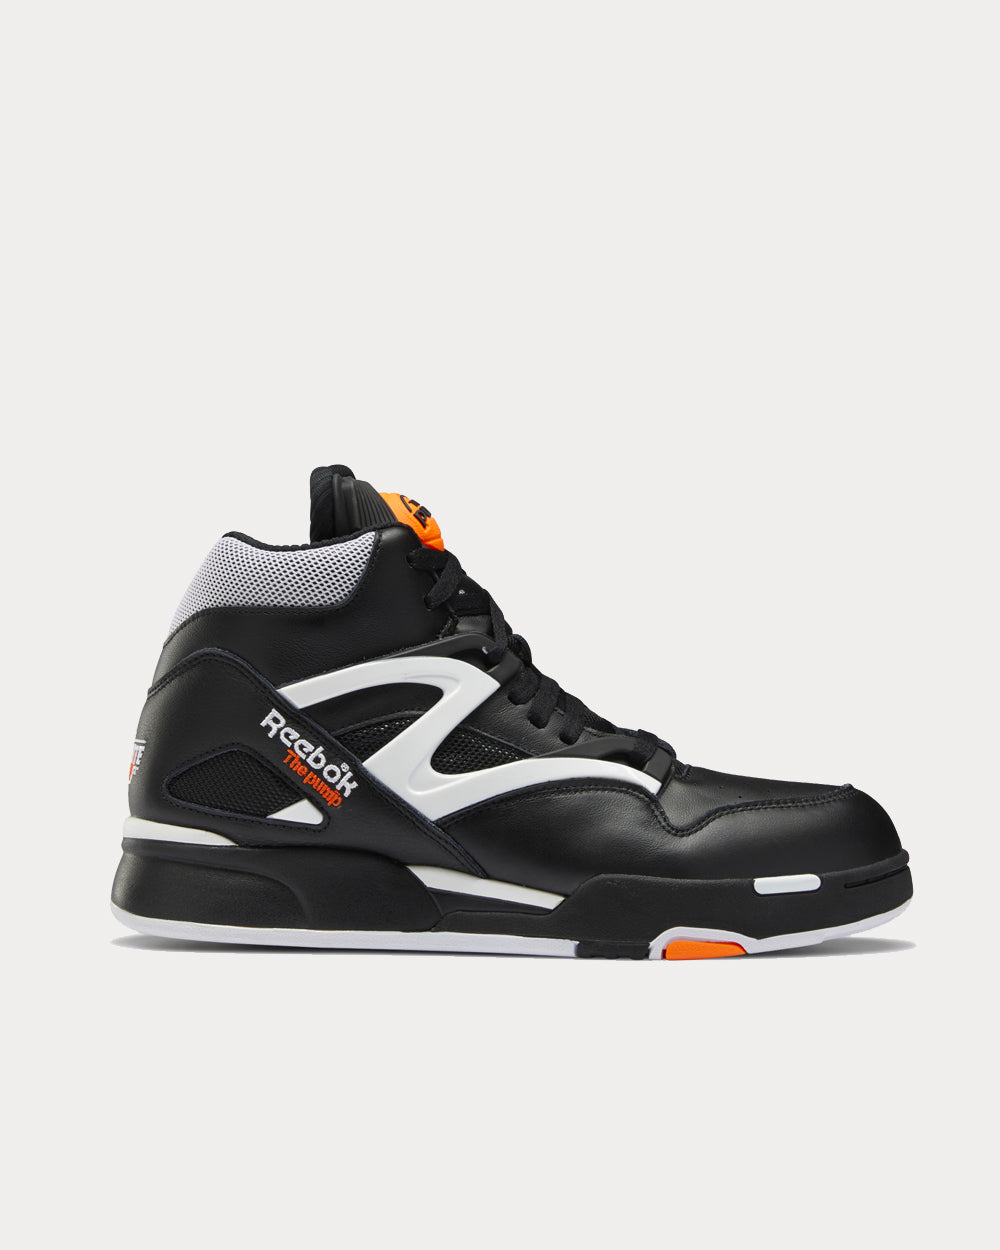 Reebok Pump Omni Zone II Black White / Orange High Top Sneakers - Sneak in Peace